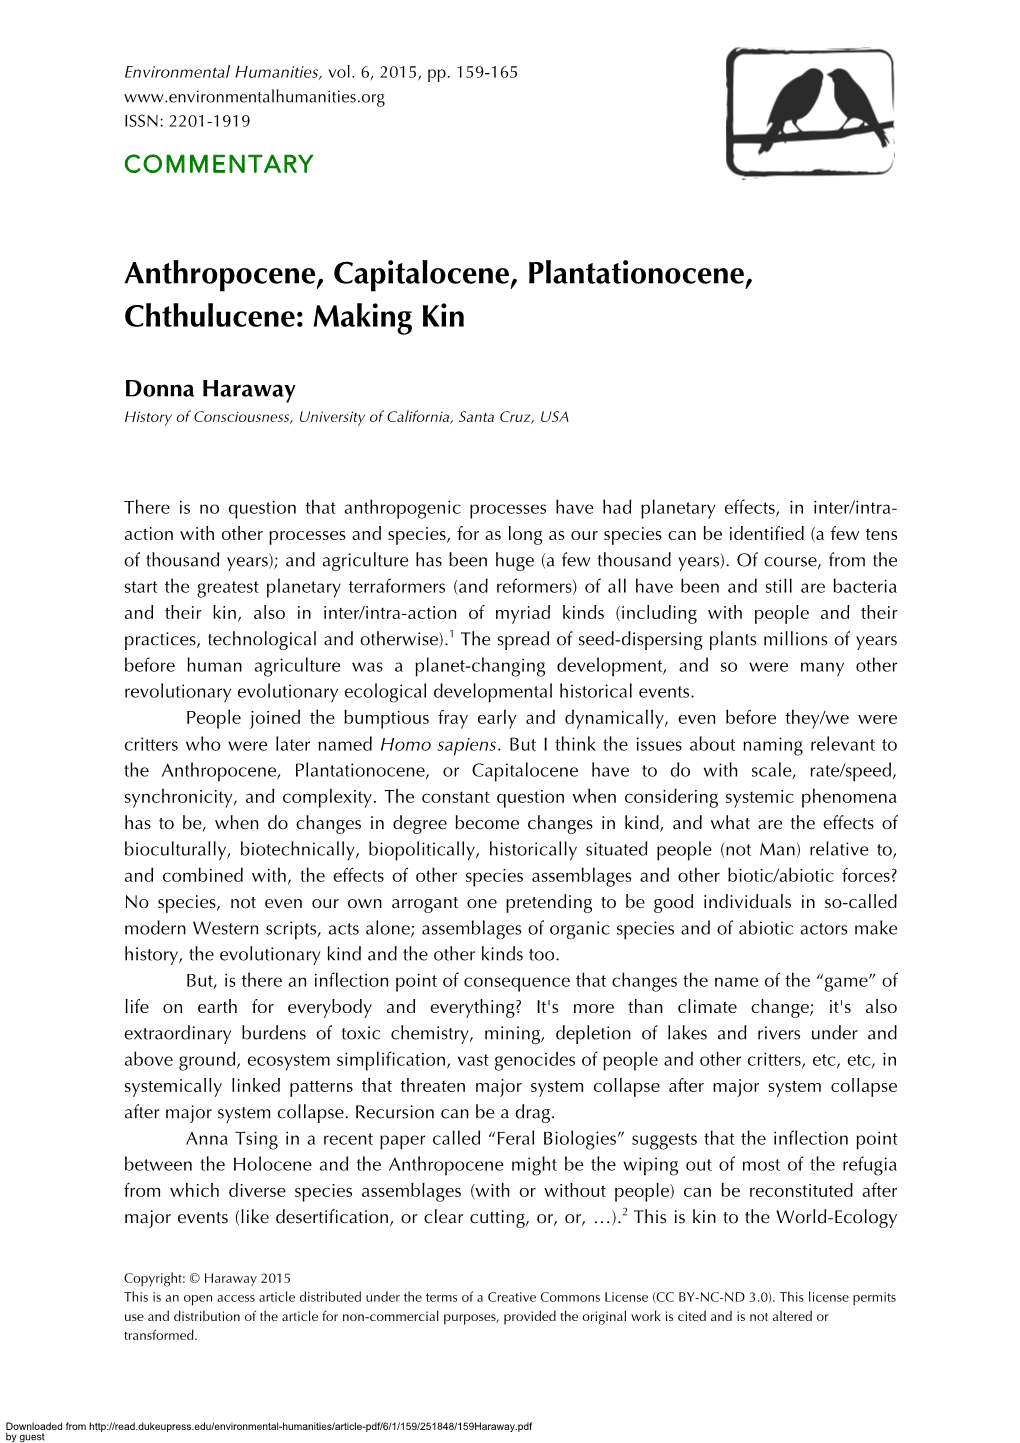 Anthropocene, Capitalocene, Plantationocene, Chthulucene: Making Kin